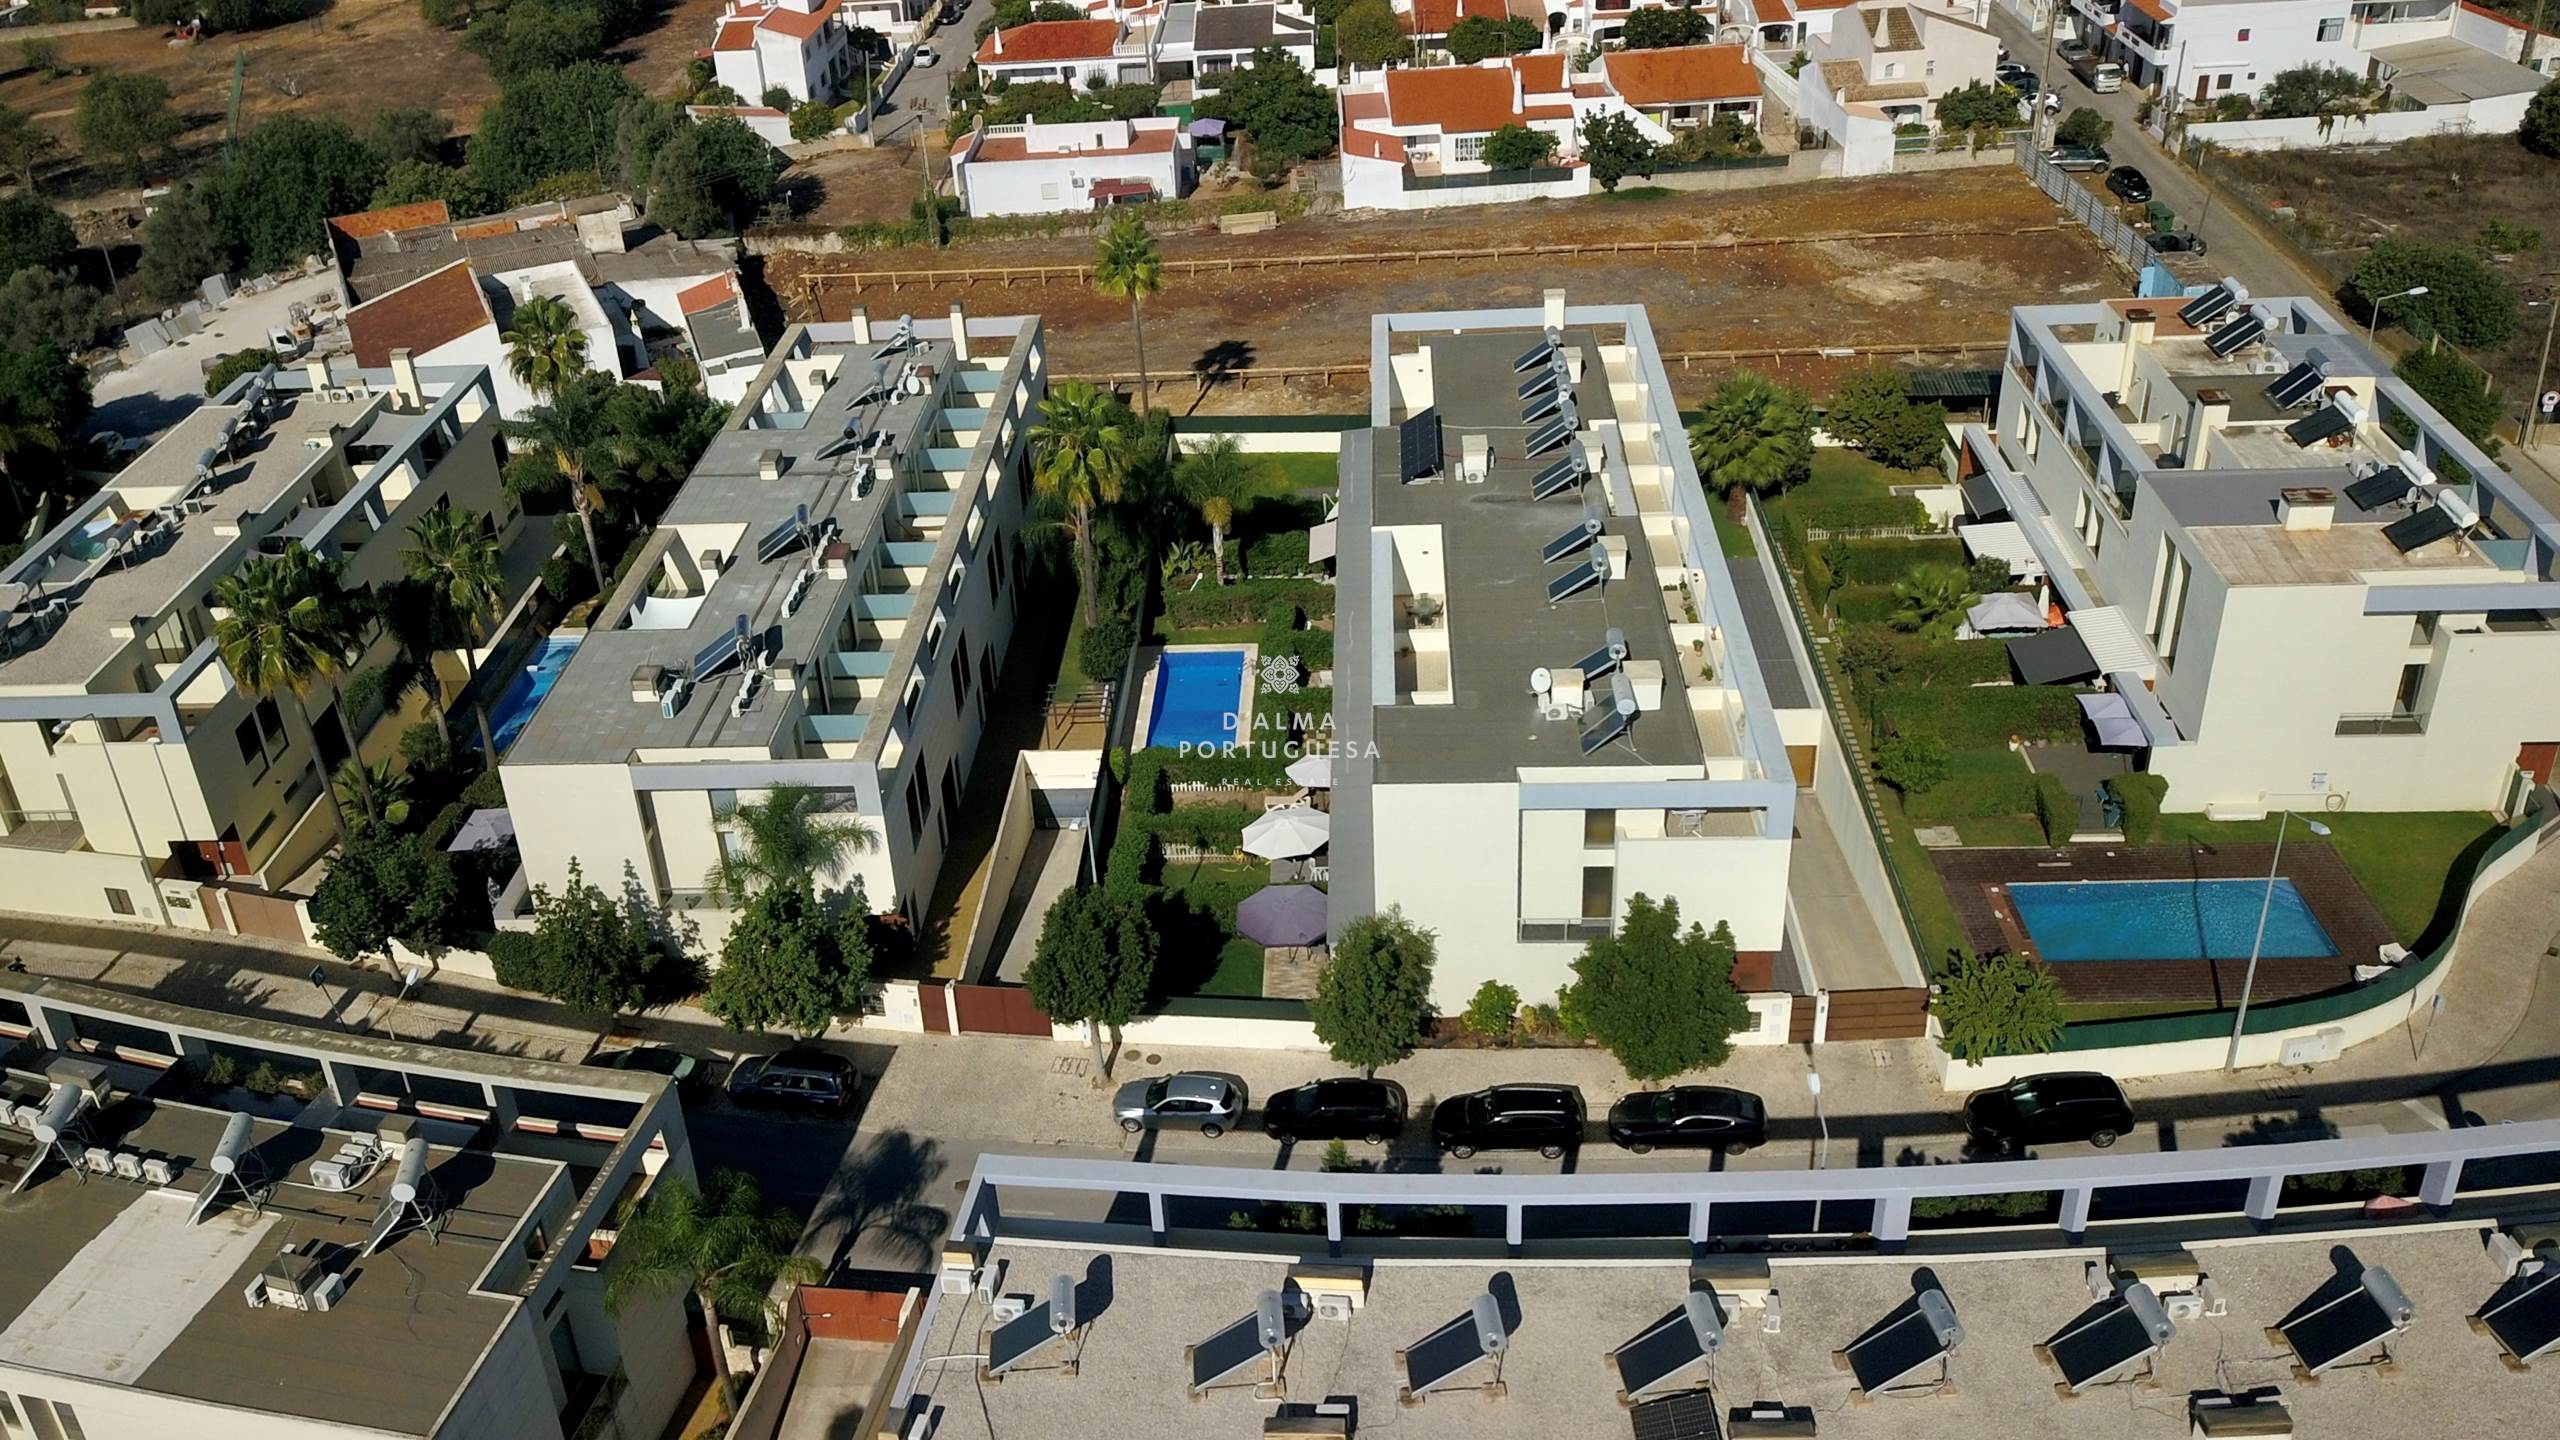 Apartamento de 3 dormitorios,Apartamento de 3 dormitorios Garaje Albufeira,Apartamento con terraza superior,Apartamento con jardín,Apartamento Ferreiras,Apartamento con piscina,Apartamento con balcón